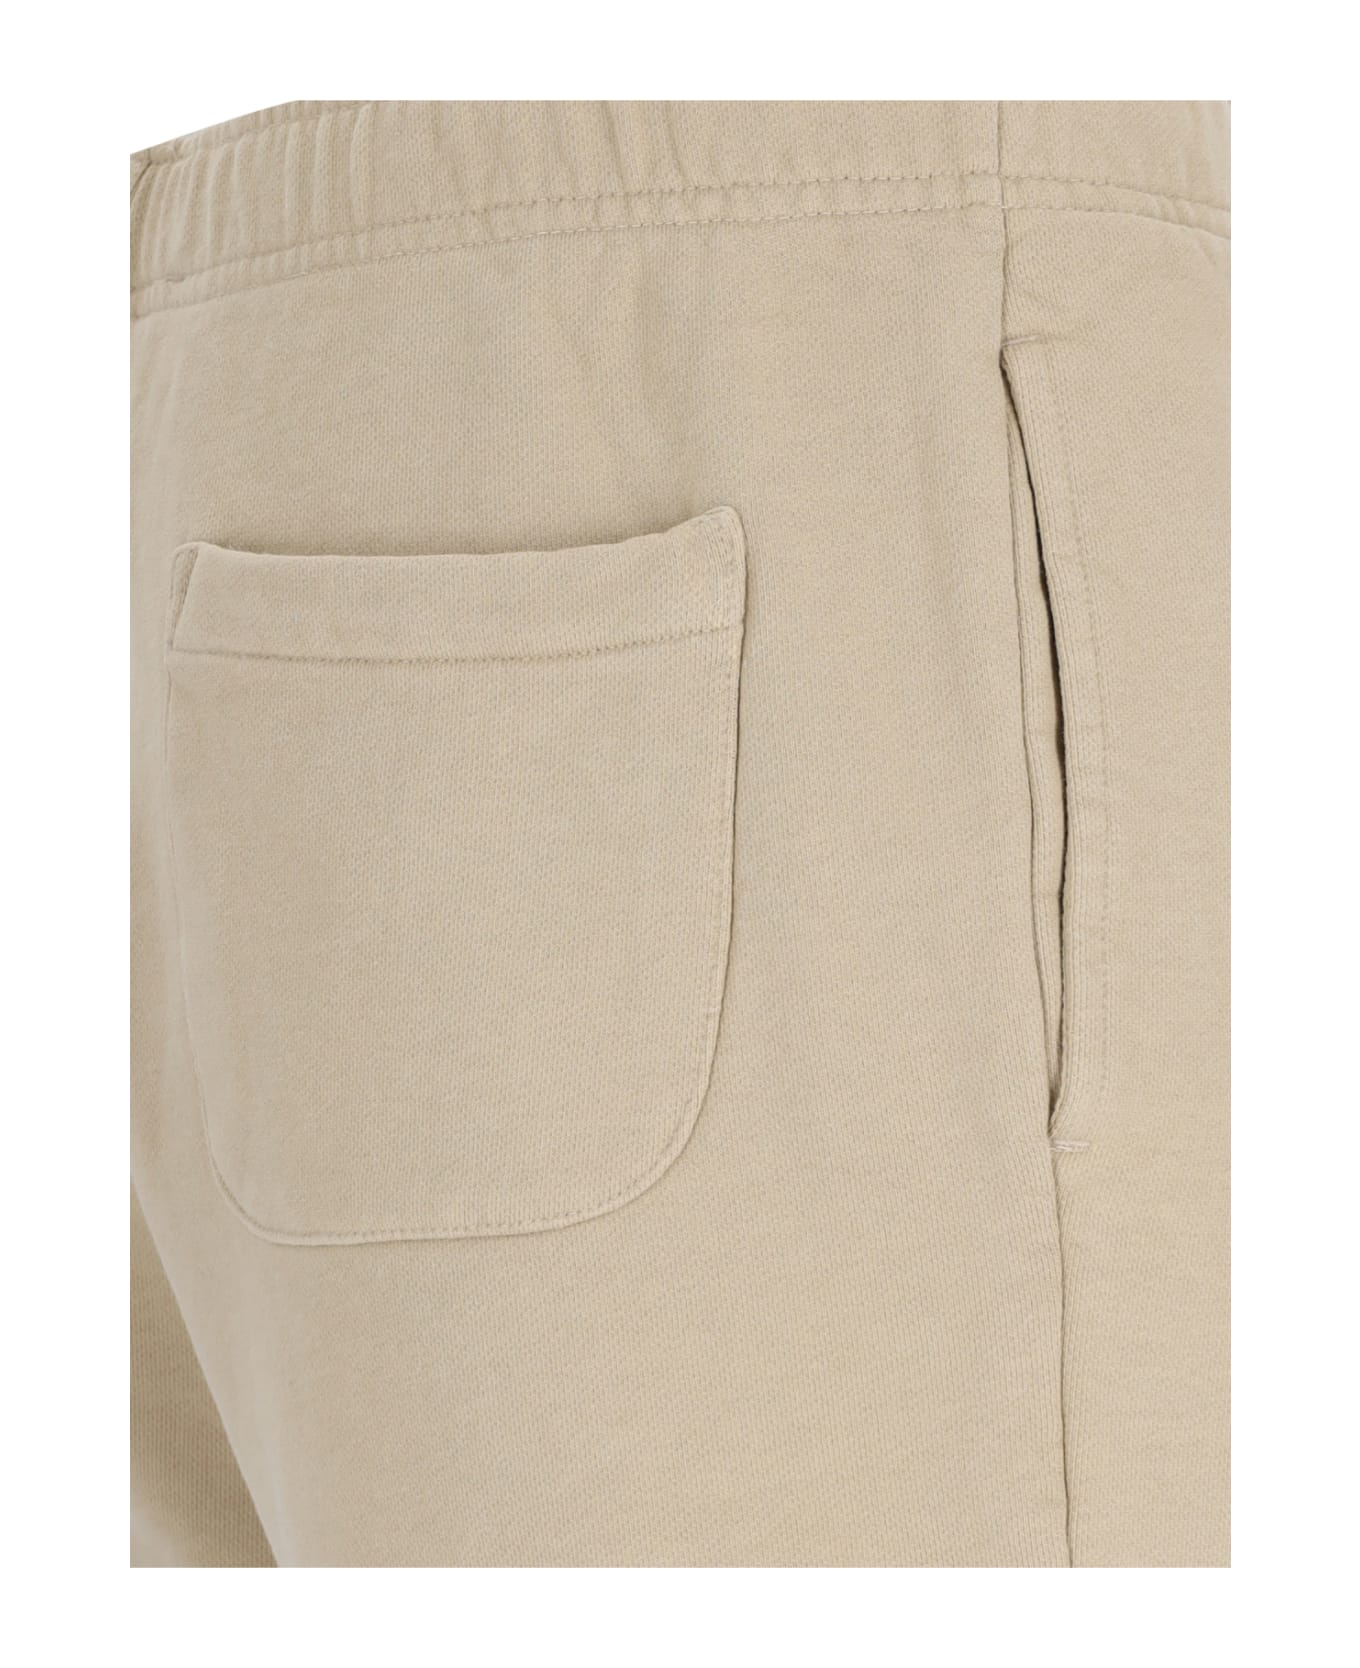 Polo Ralph Lauren Track Shorts - Beige